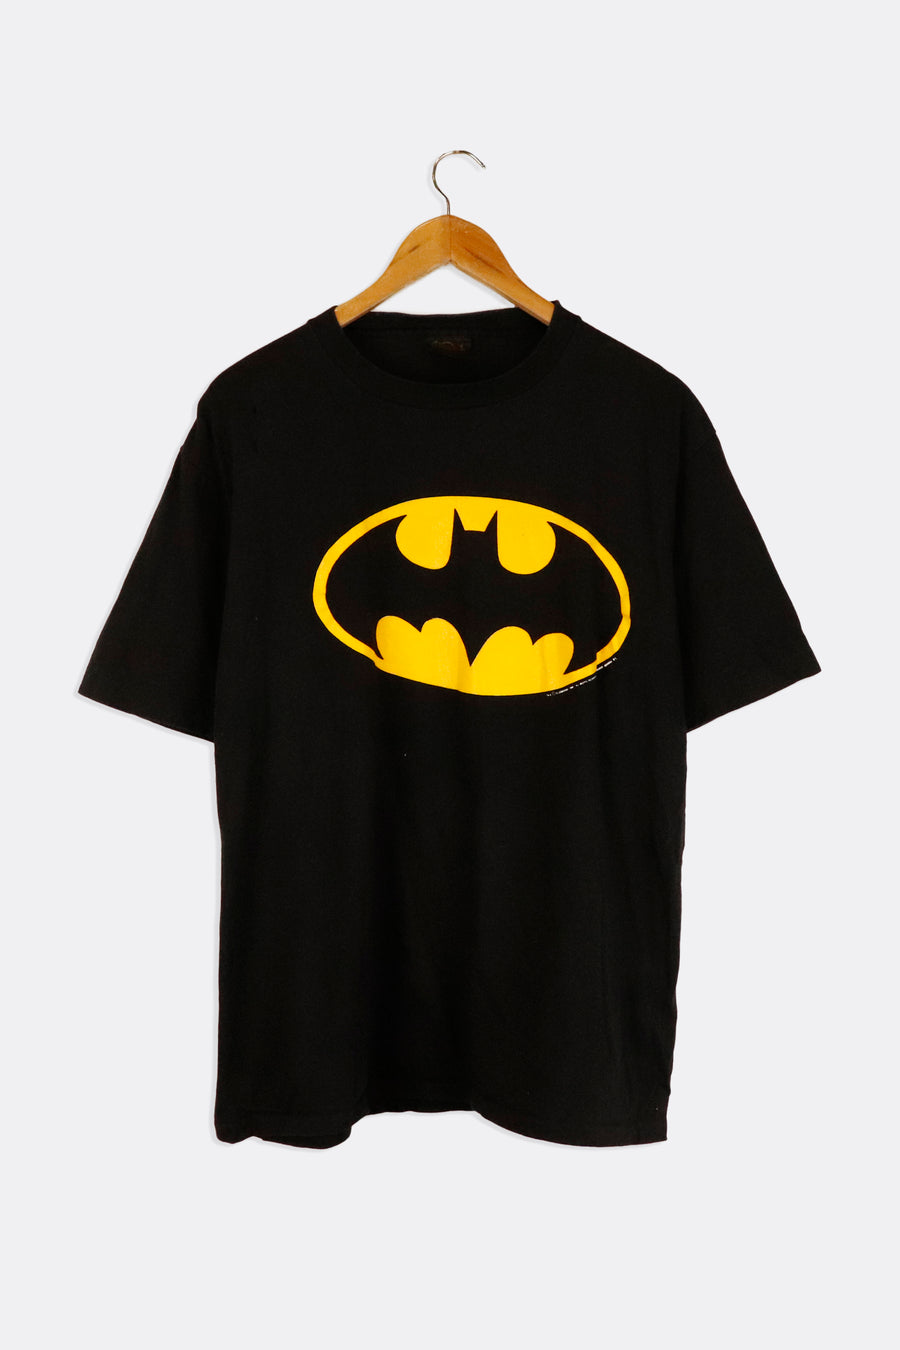 Vintage Batman Symbol Logo Graphic T Shirt Sz XL